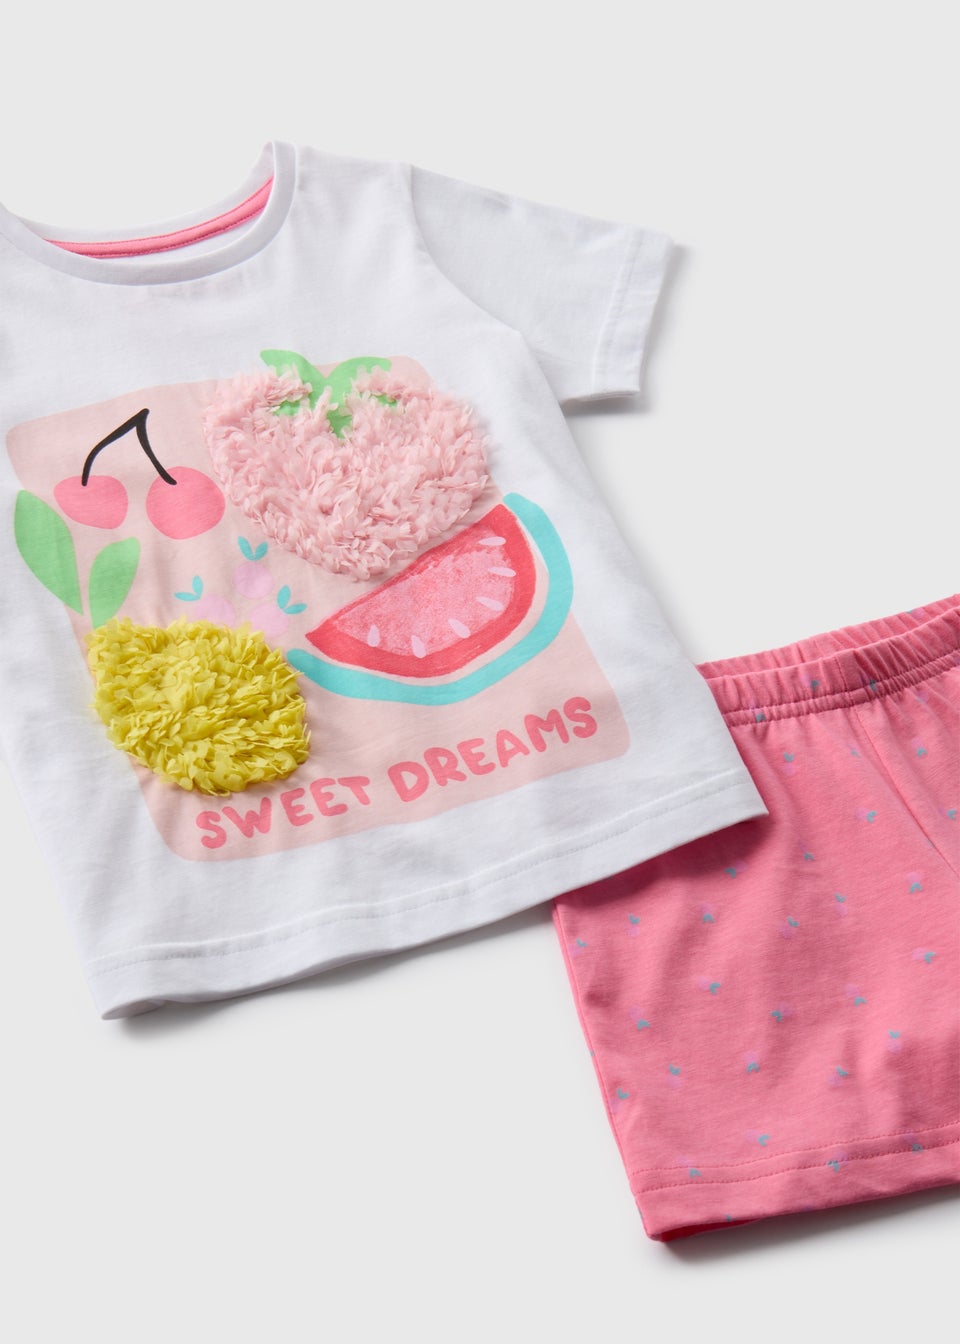 Girls Pink Fruit Pyjama Set (9mths-5yrs)